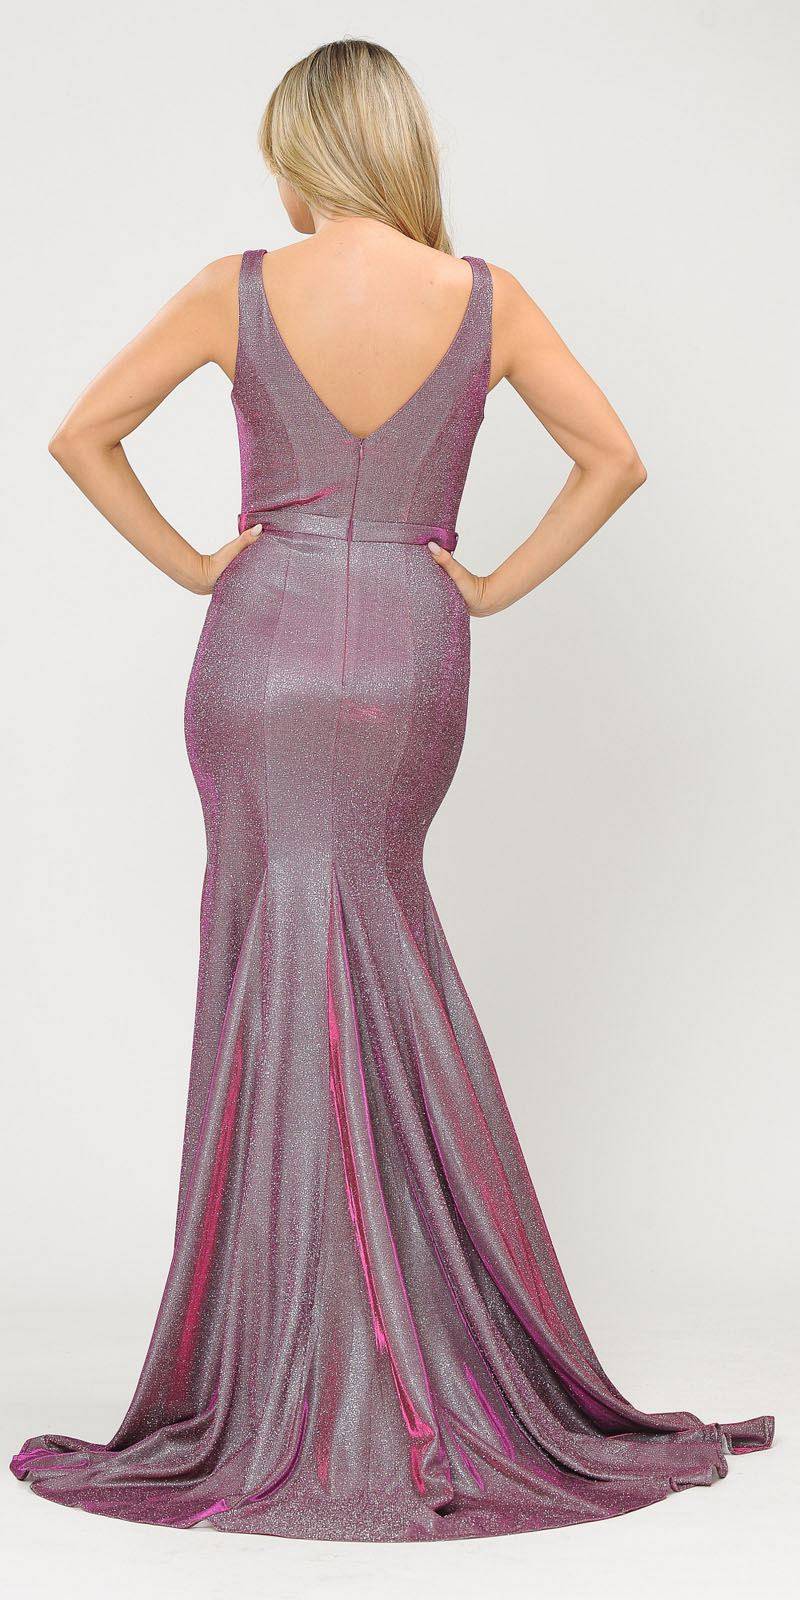 Poly USA 8704 Magenta Mermaid Style Long Prom Dress Sleeveless